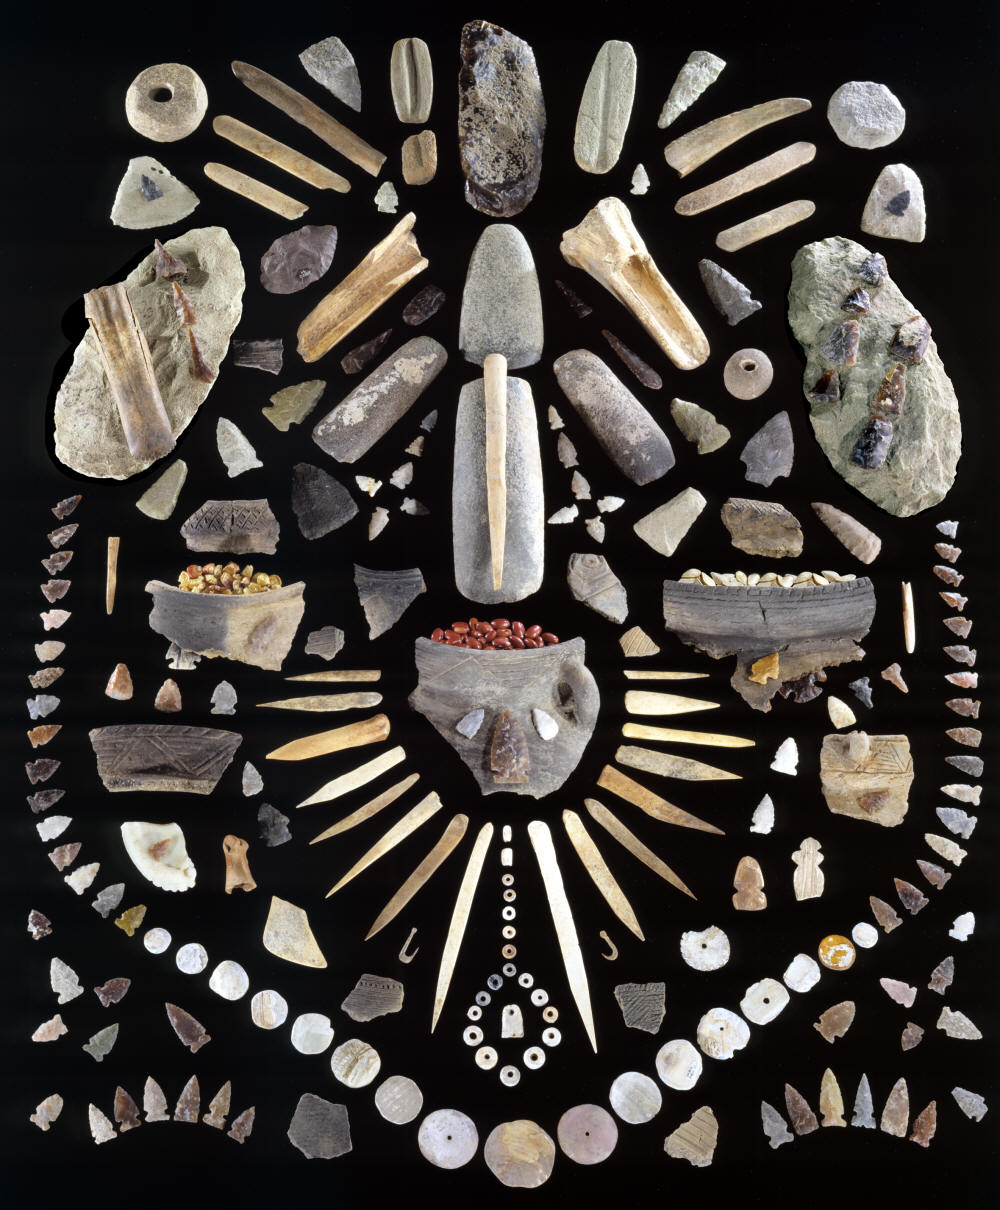 Mitchell site poster showing 227 artifacts, South Dakota.